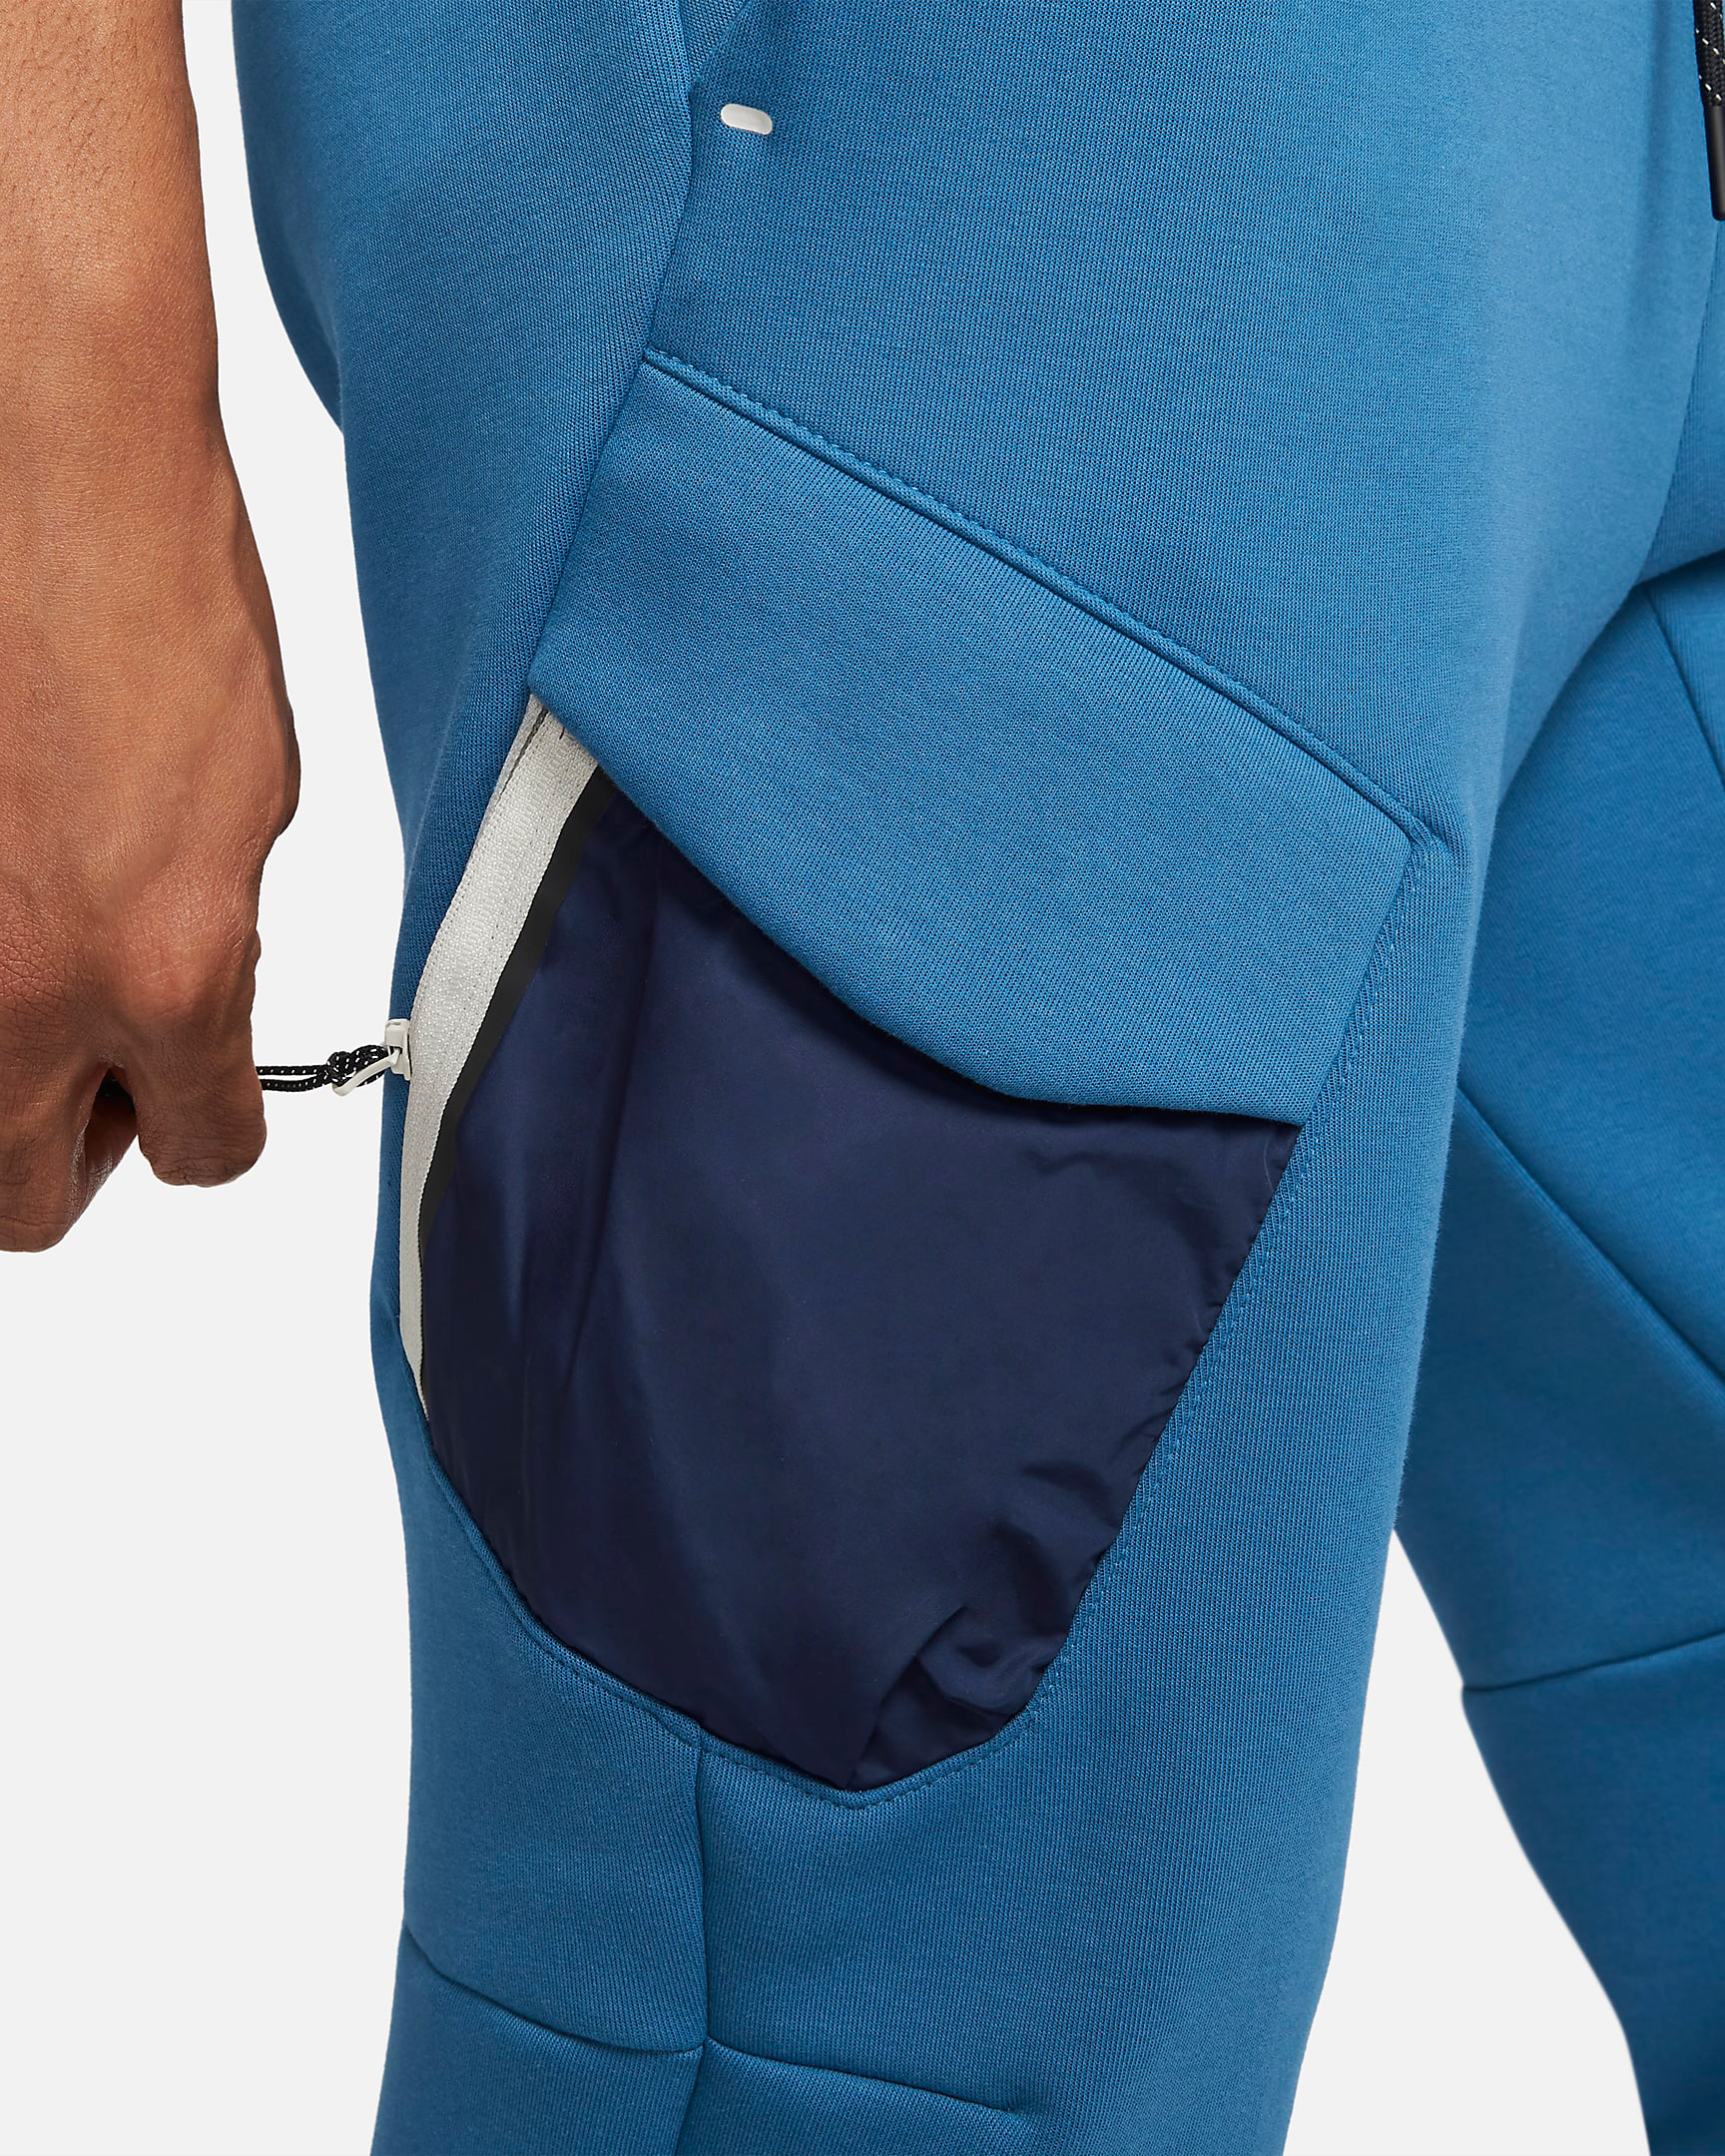 nike-tech-fleece-utility-pants-dark-marina-blue-4